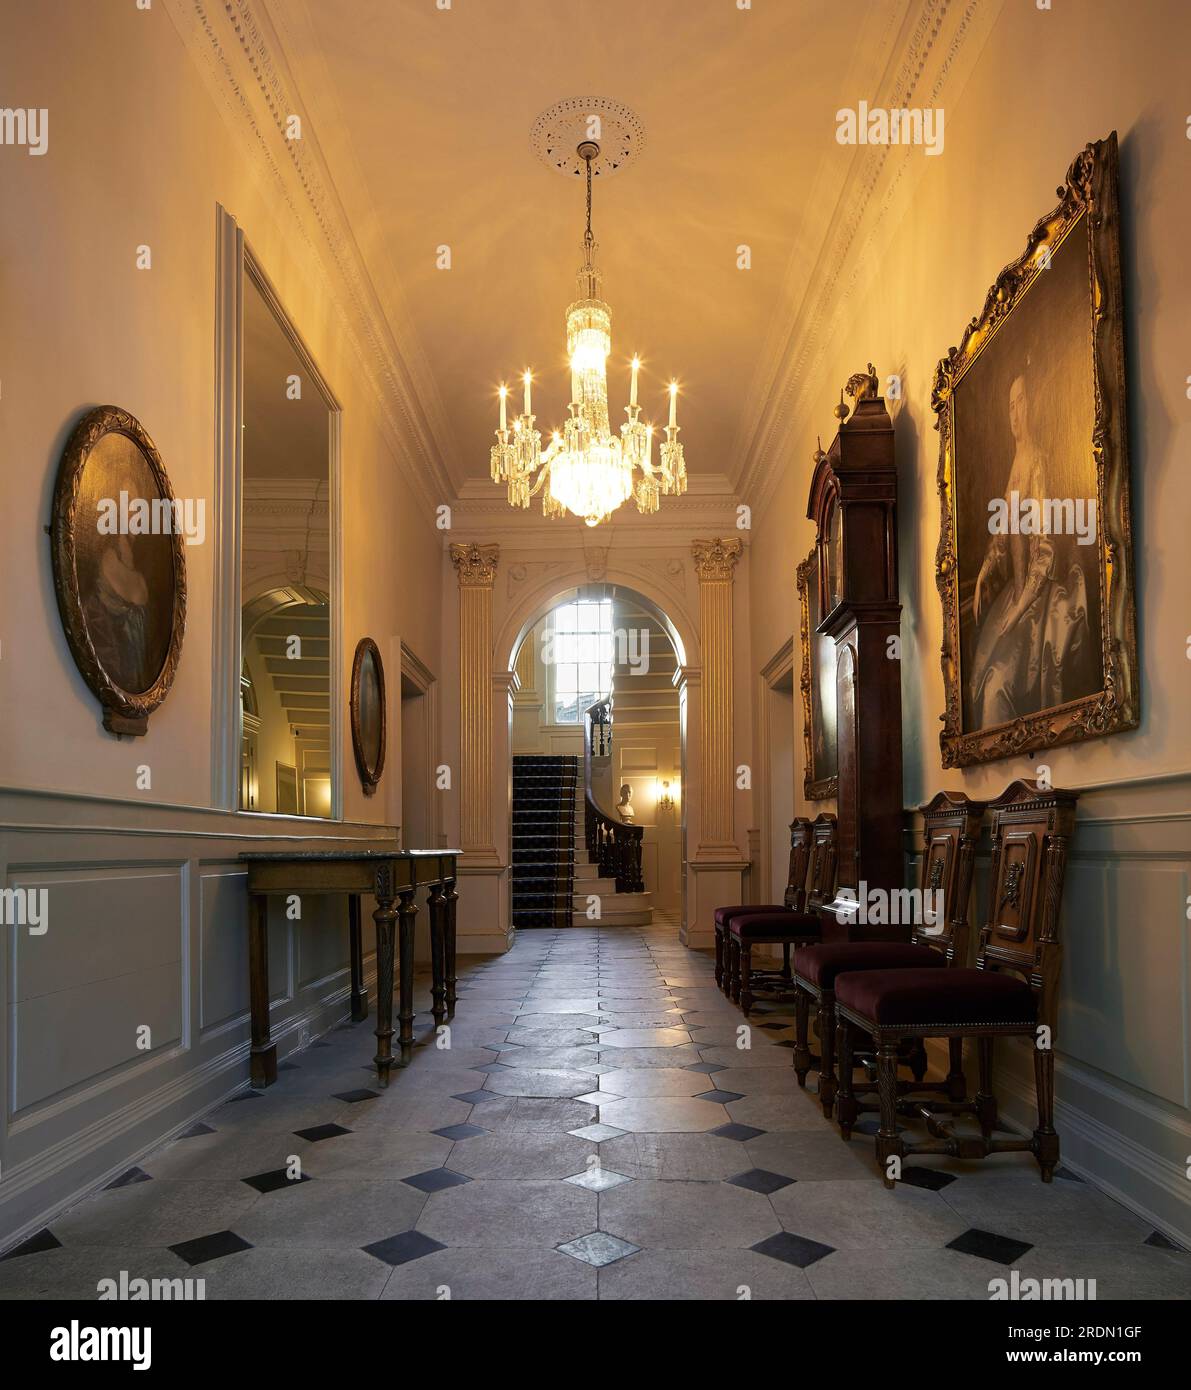 Corridor leading to stairway. York Mansion House, York, United Kingdom. Architect: De Matos Ryan, 2018. Stock Photo